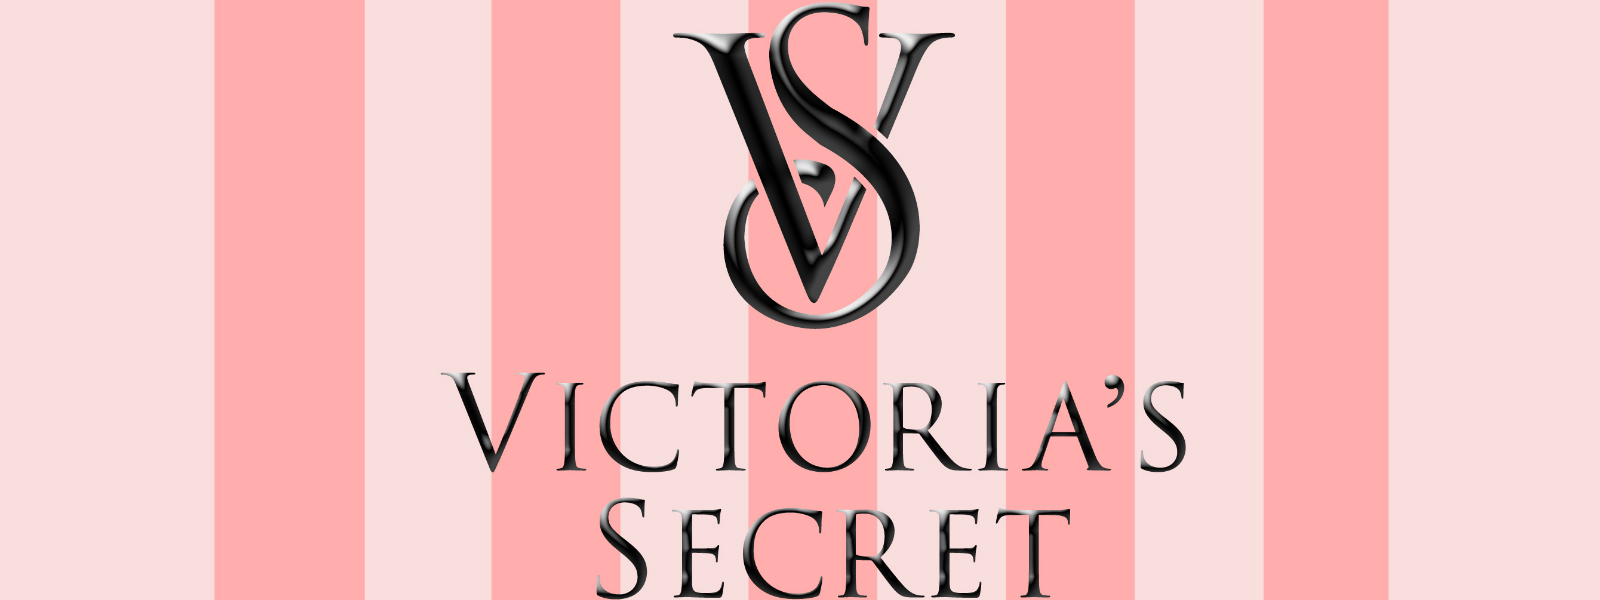 RW's statement on Victoria's Secrets 